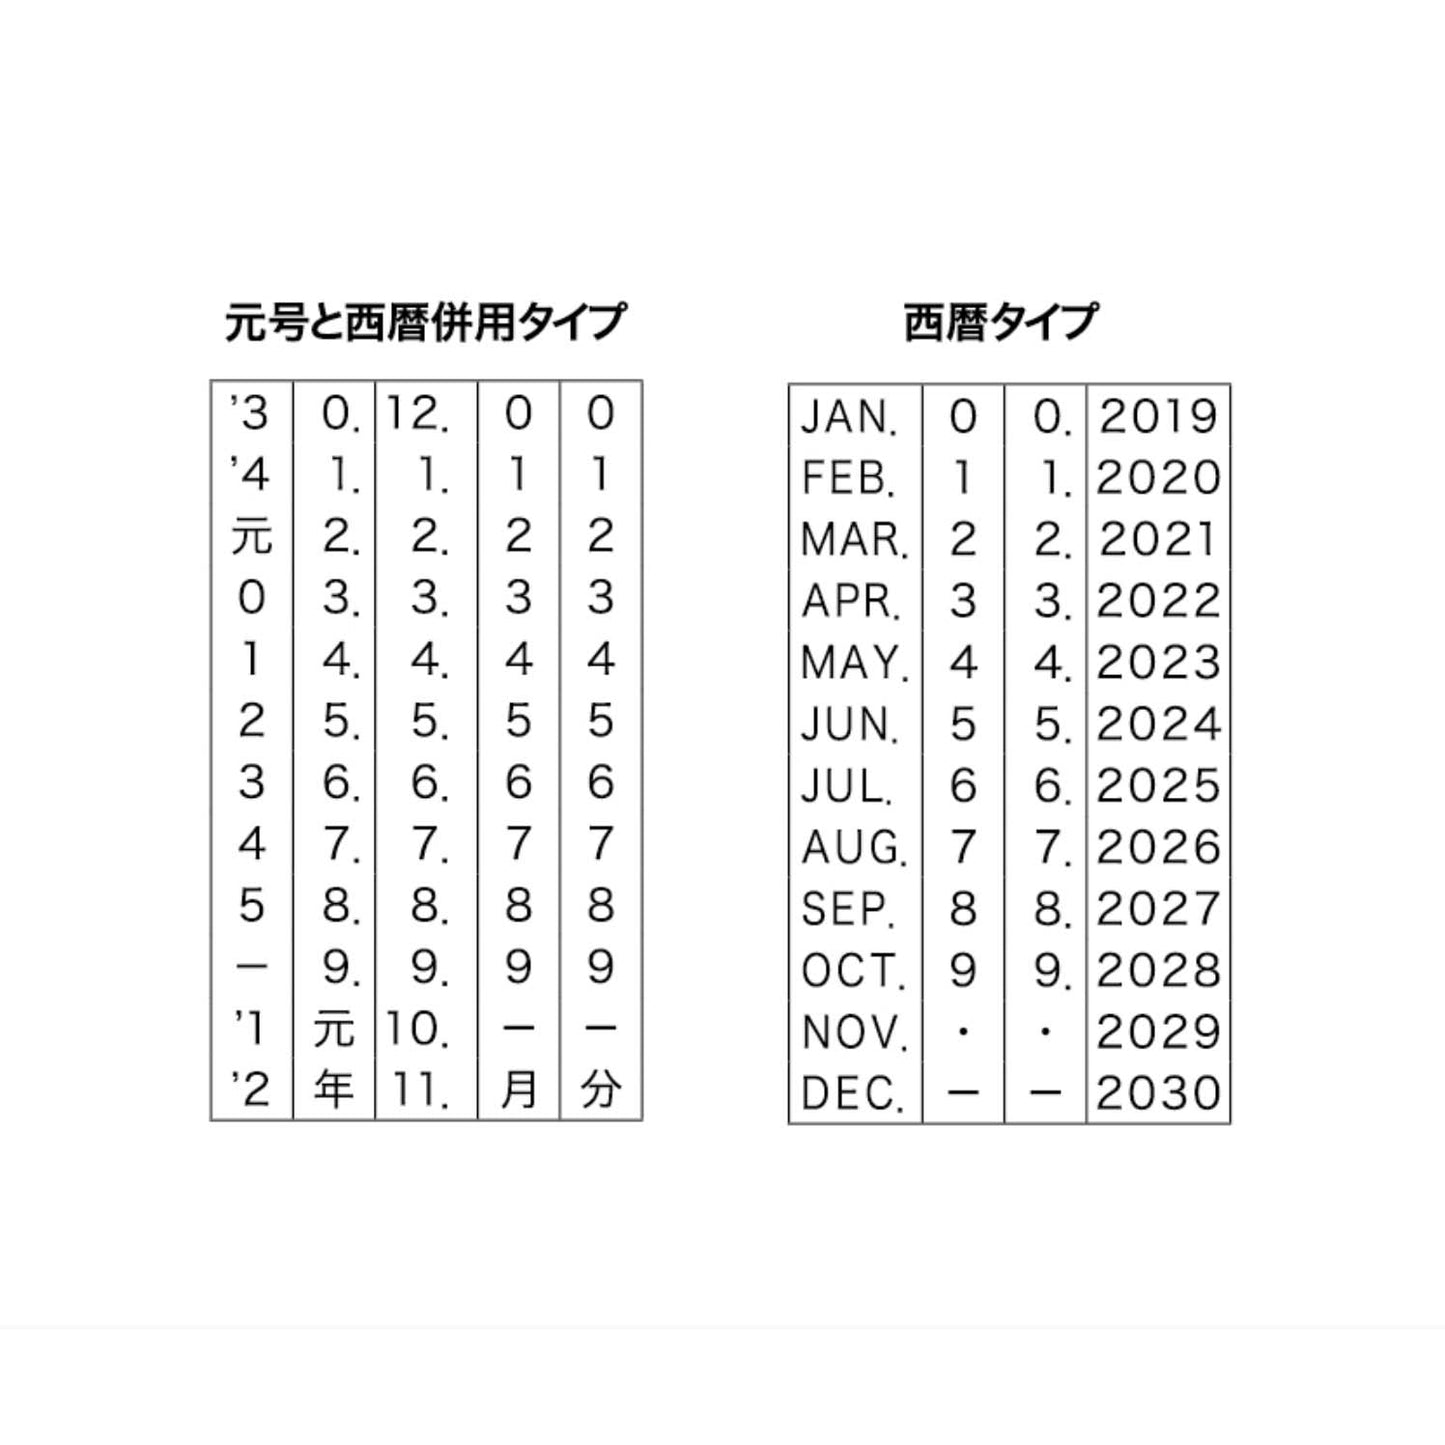 [Limited Item] Sanby x mizushima Frame Date Stamp Flower